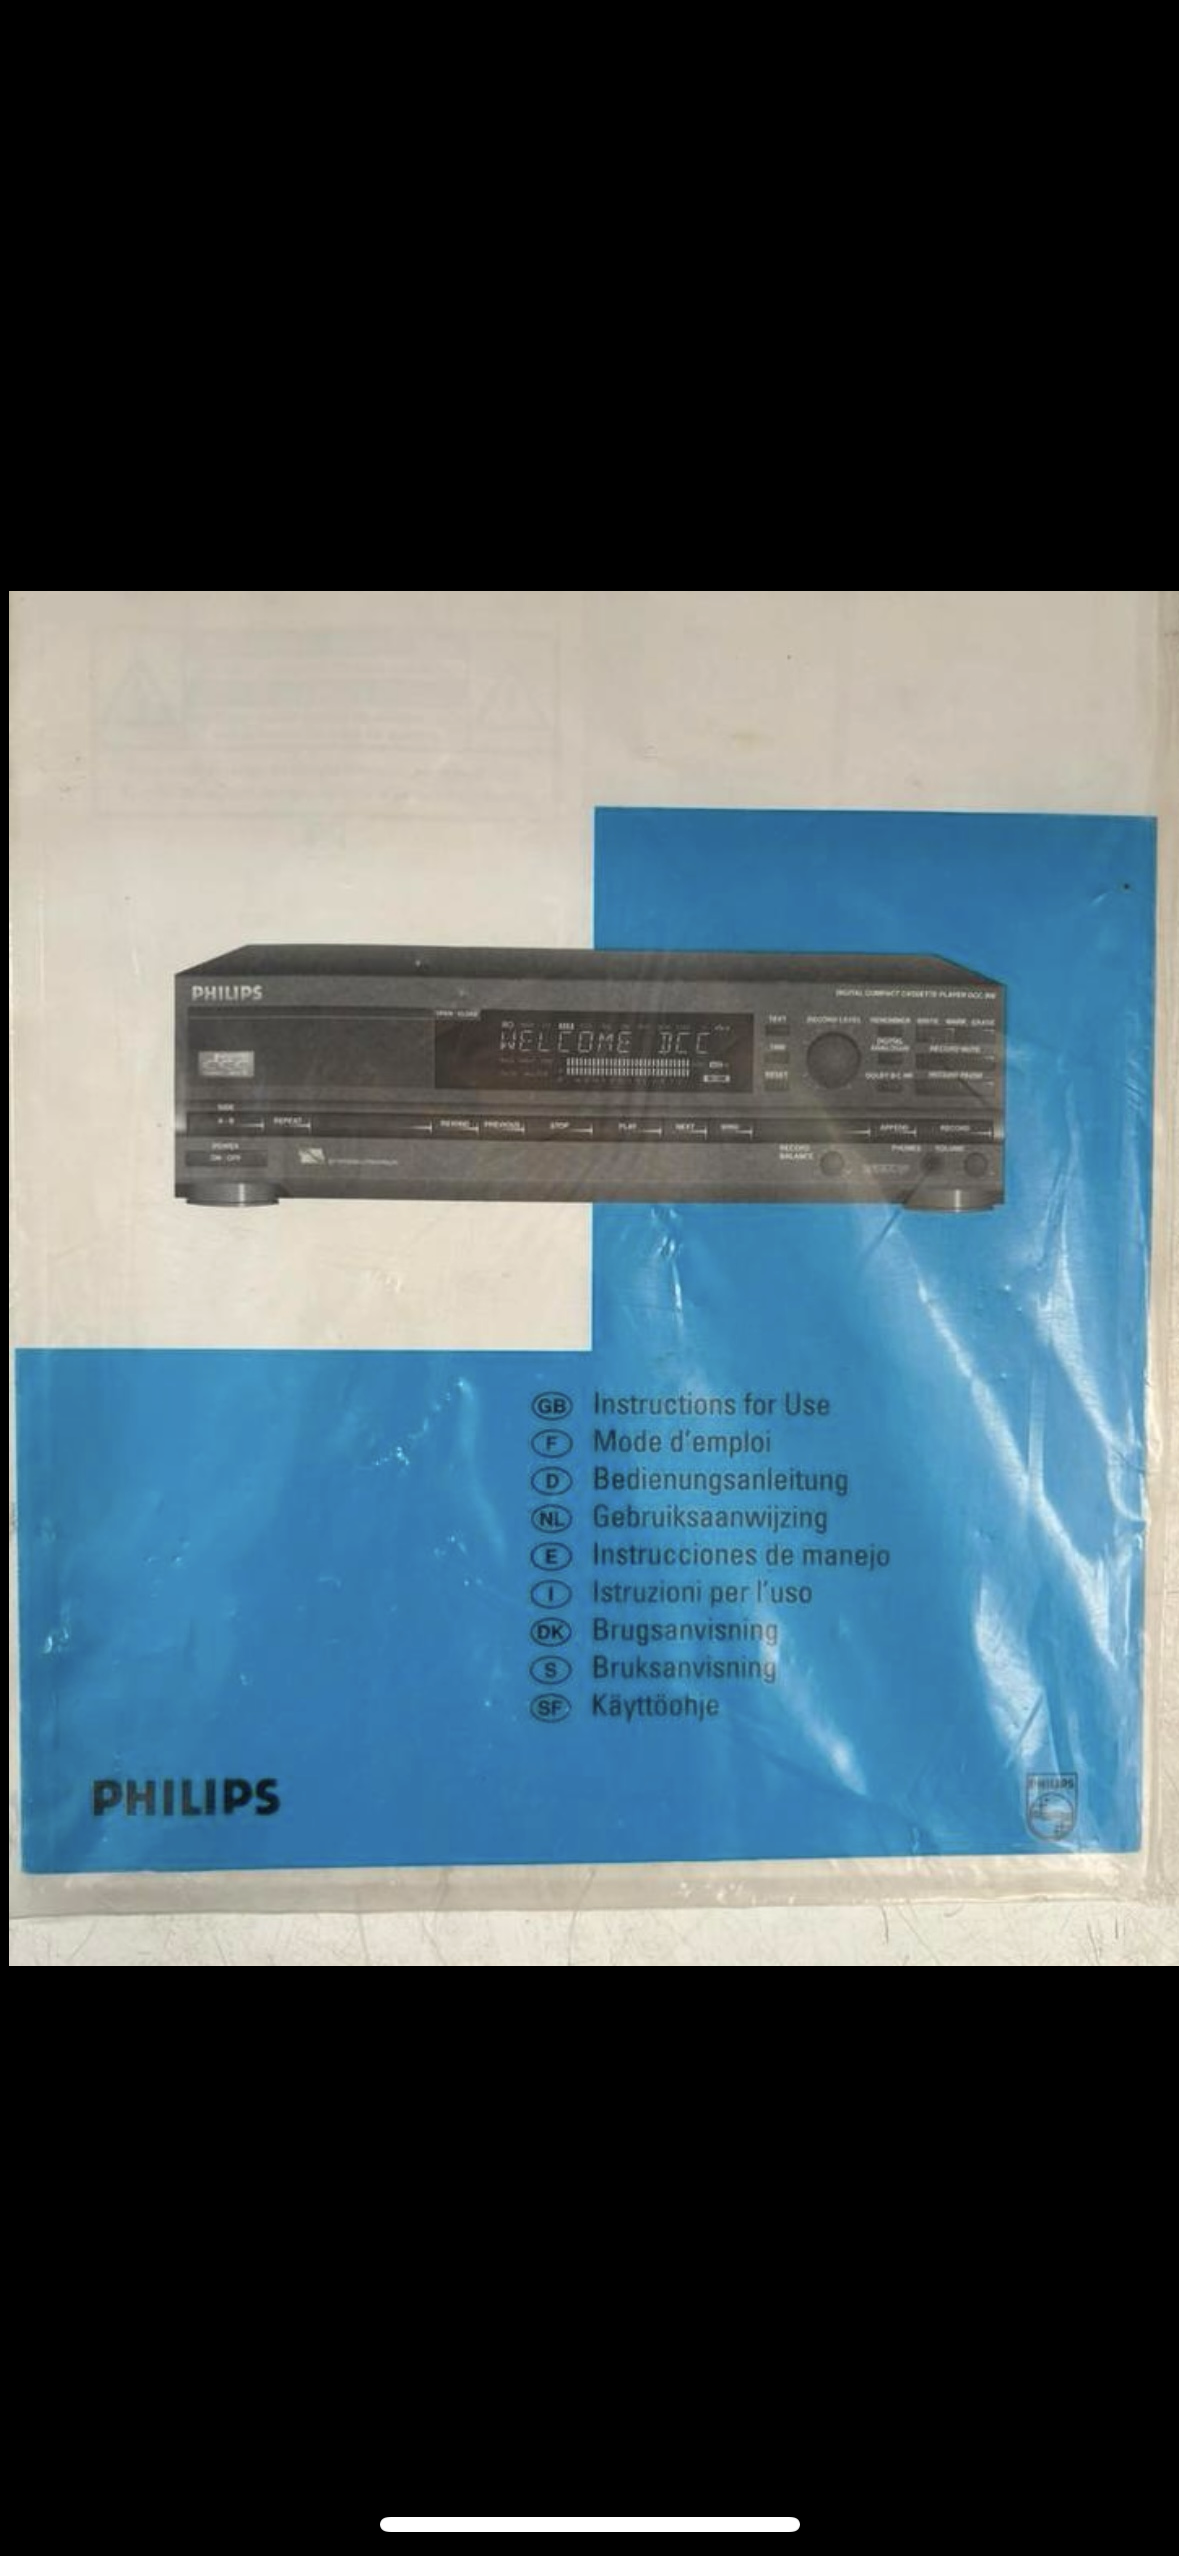 Philips DCC 300 Digital Compact Cassette Player Manual